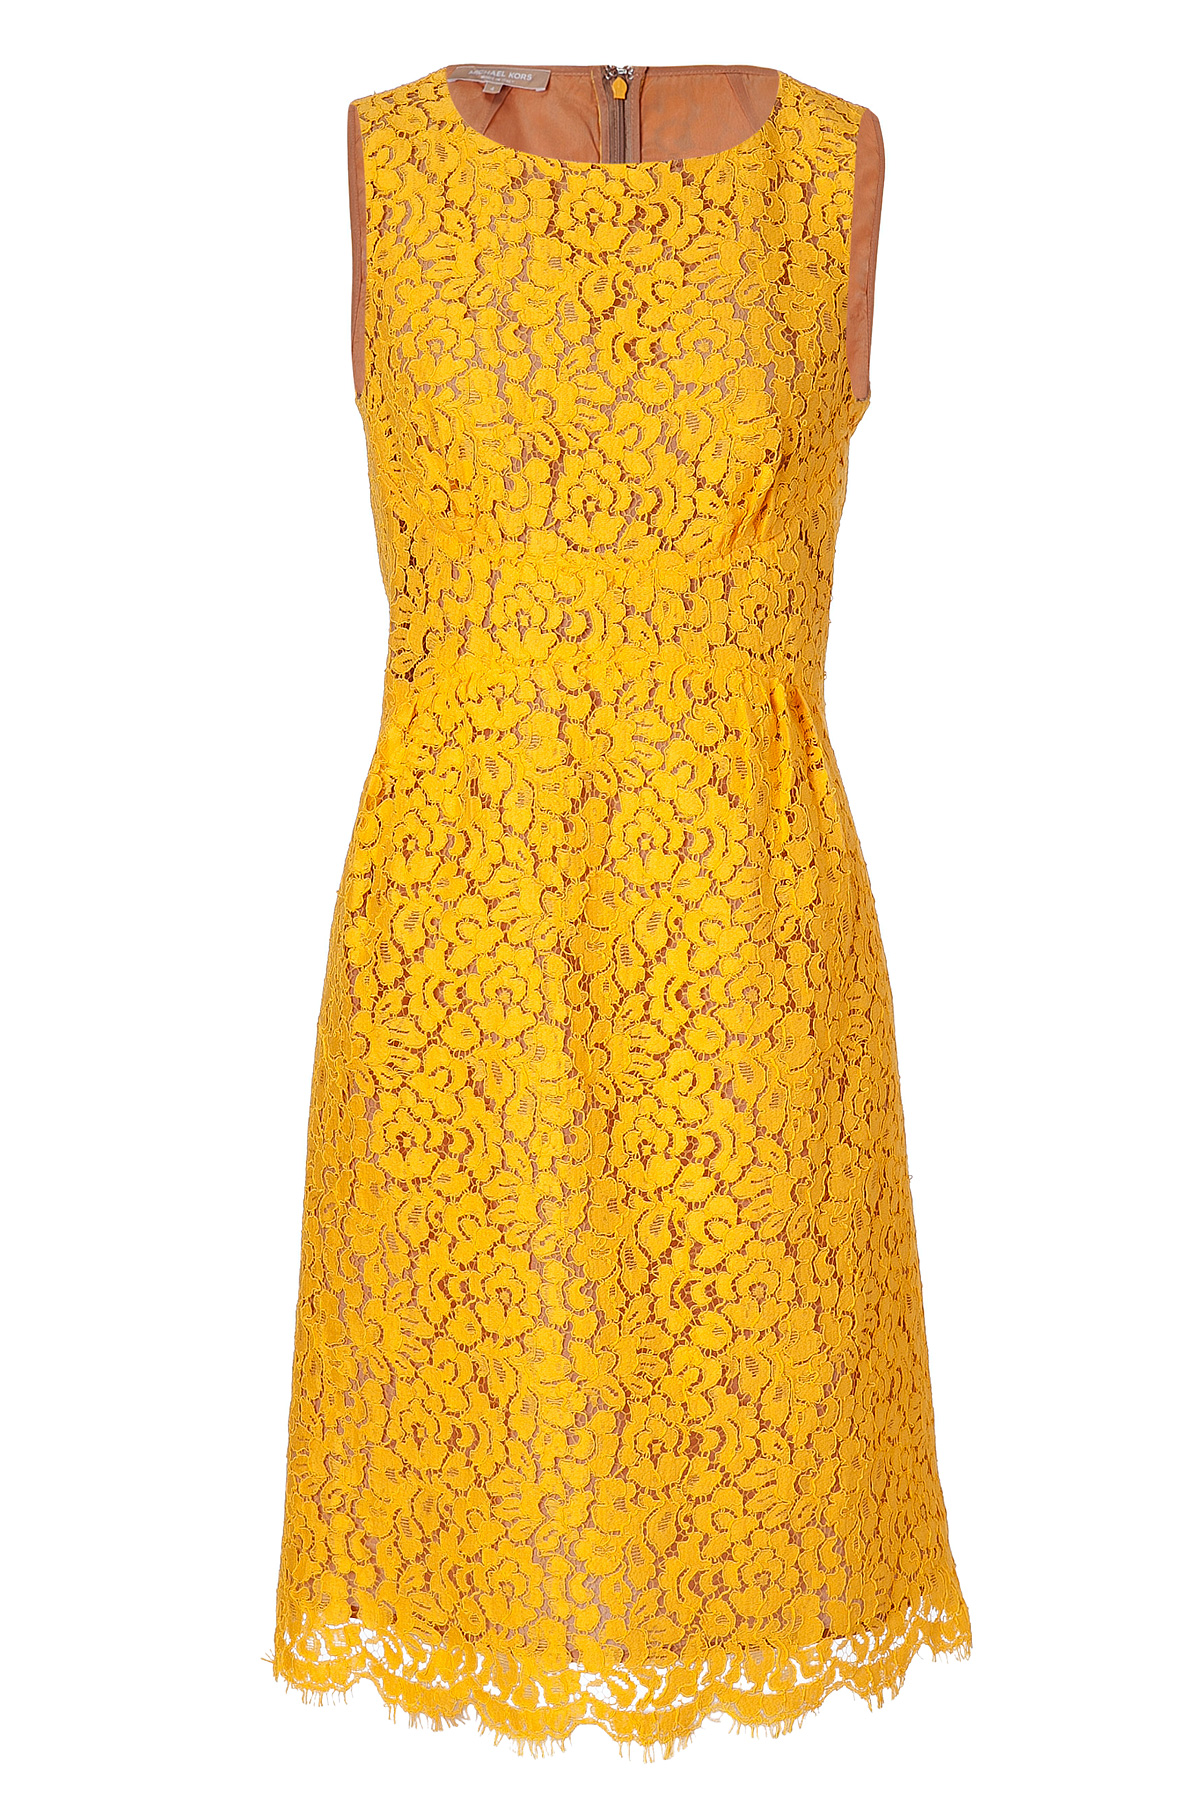 Michael Kors Sunflower Cotton blend Lace Dress in Yellow - Lyst